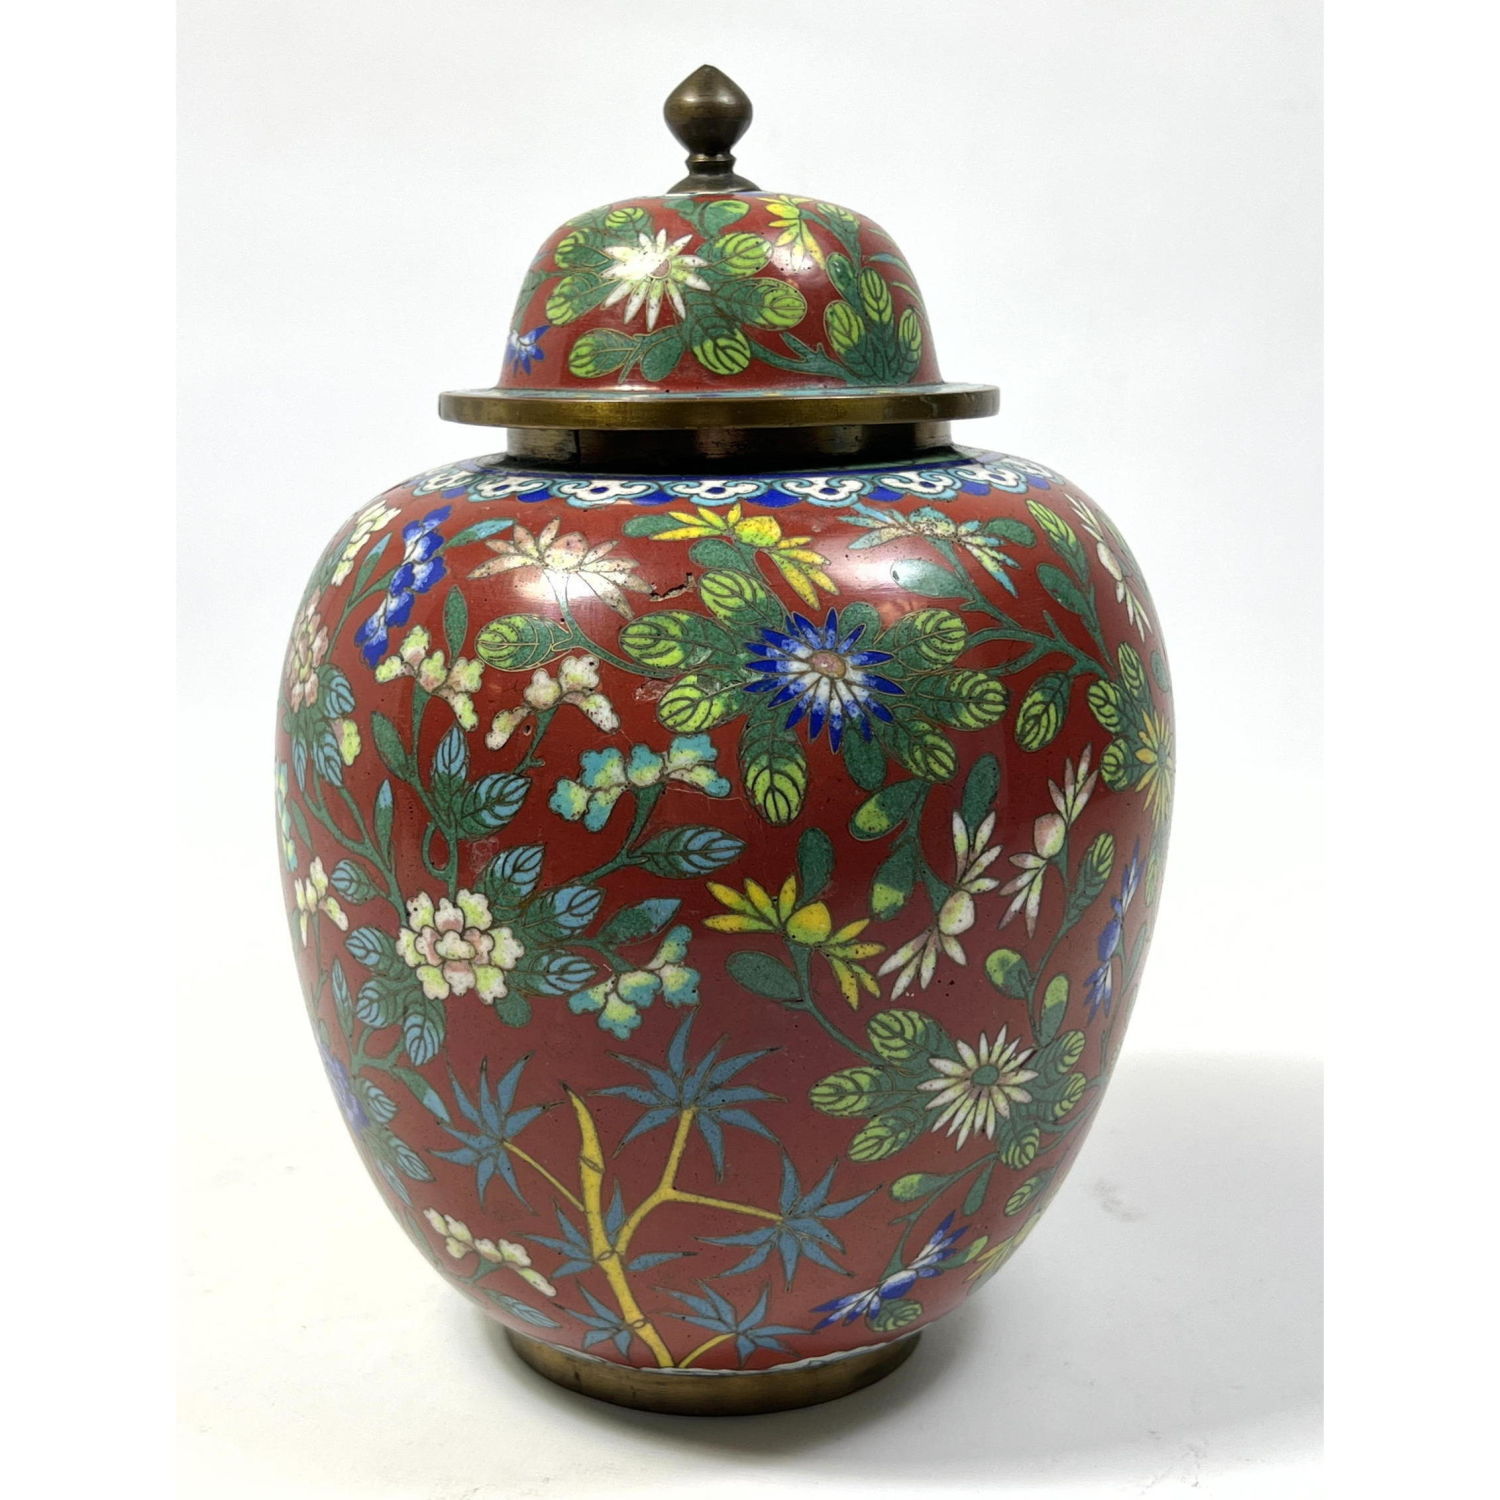 Cloisonne covered jar with lid. Reddish